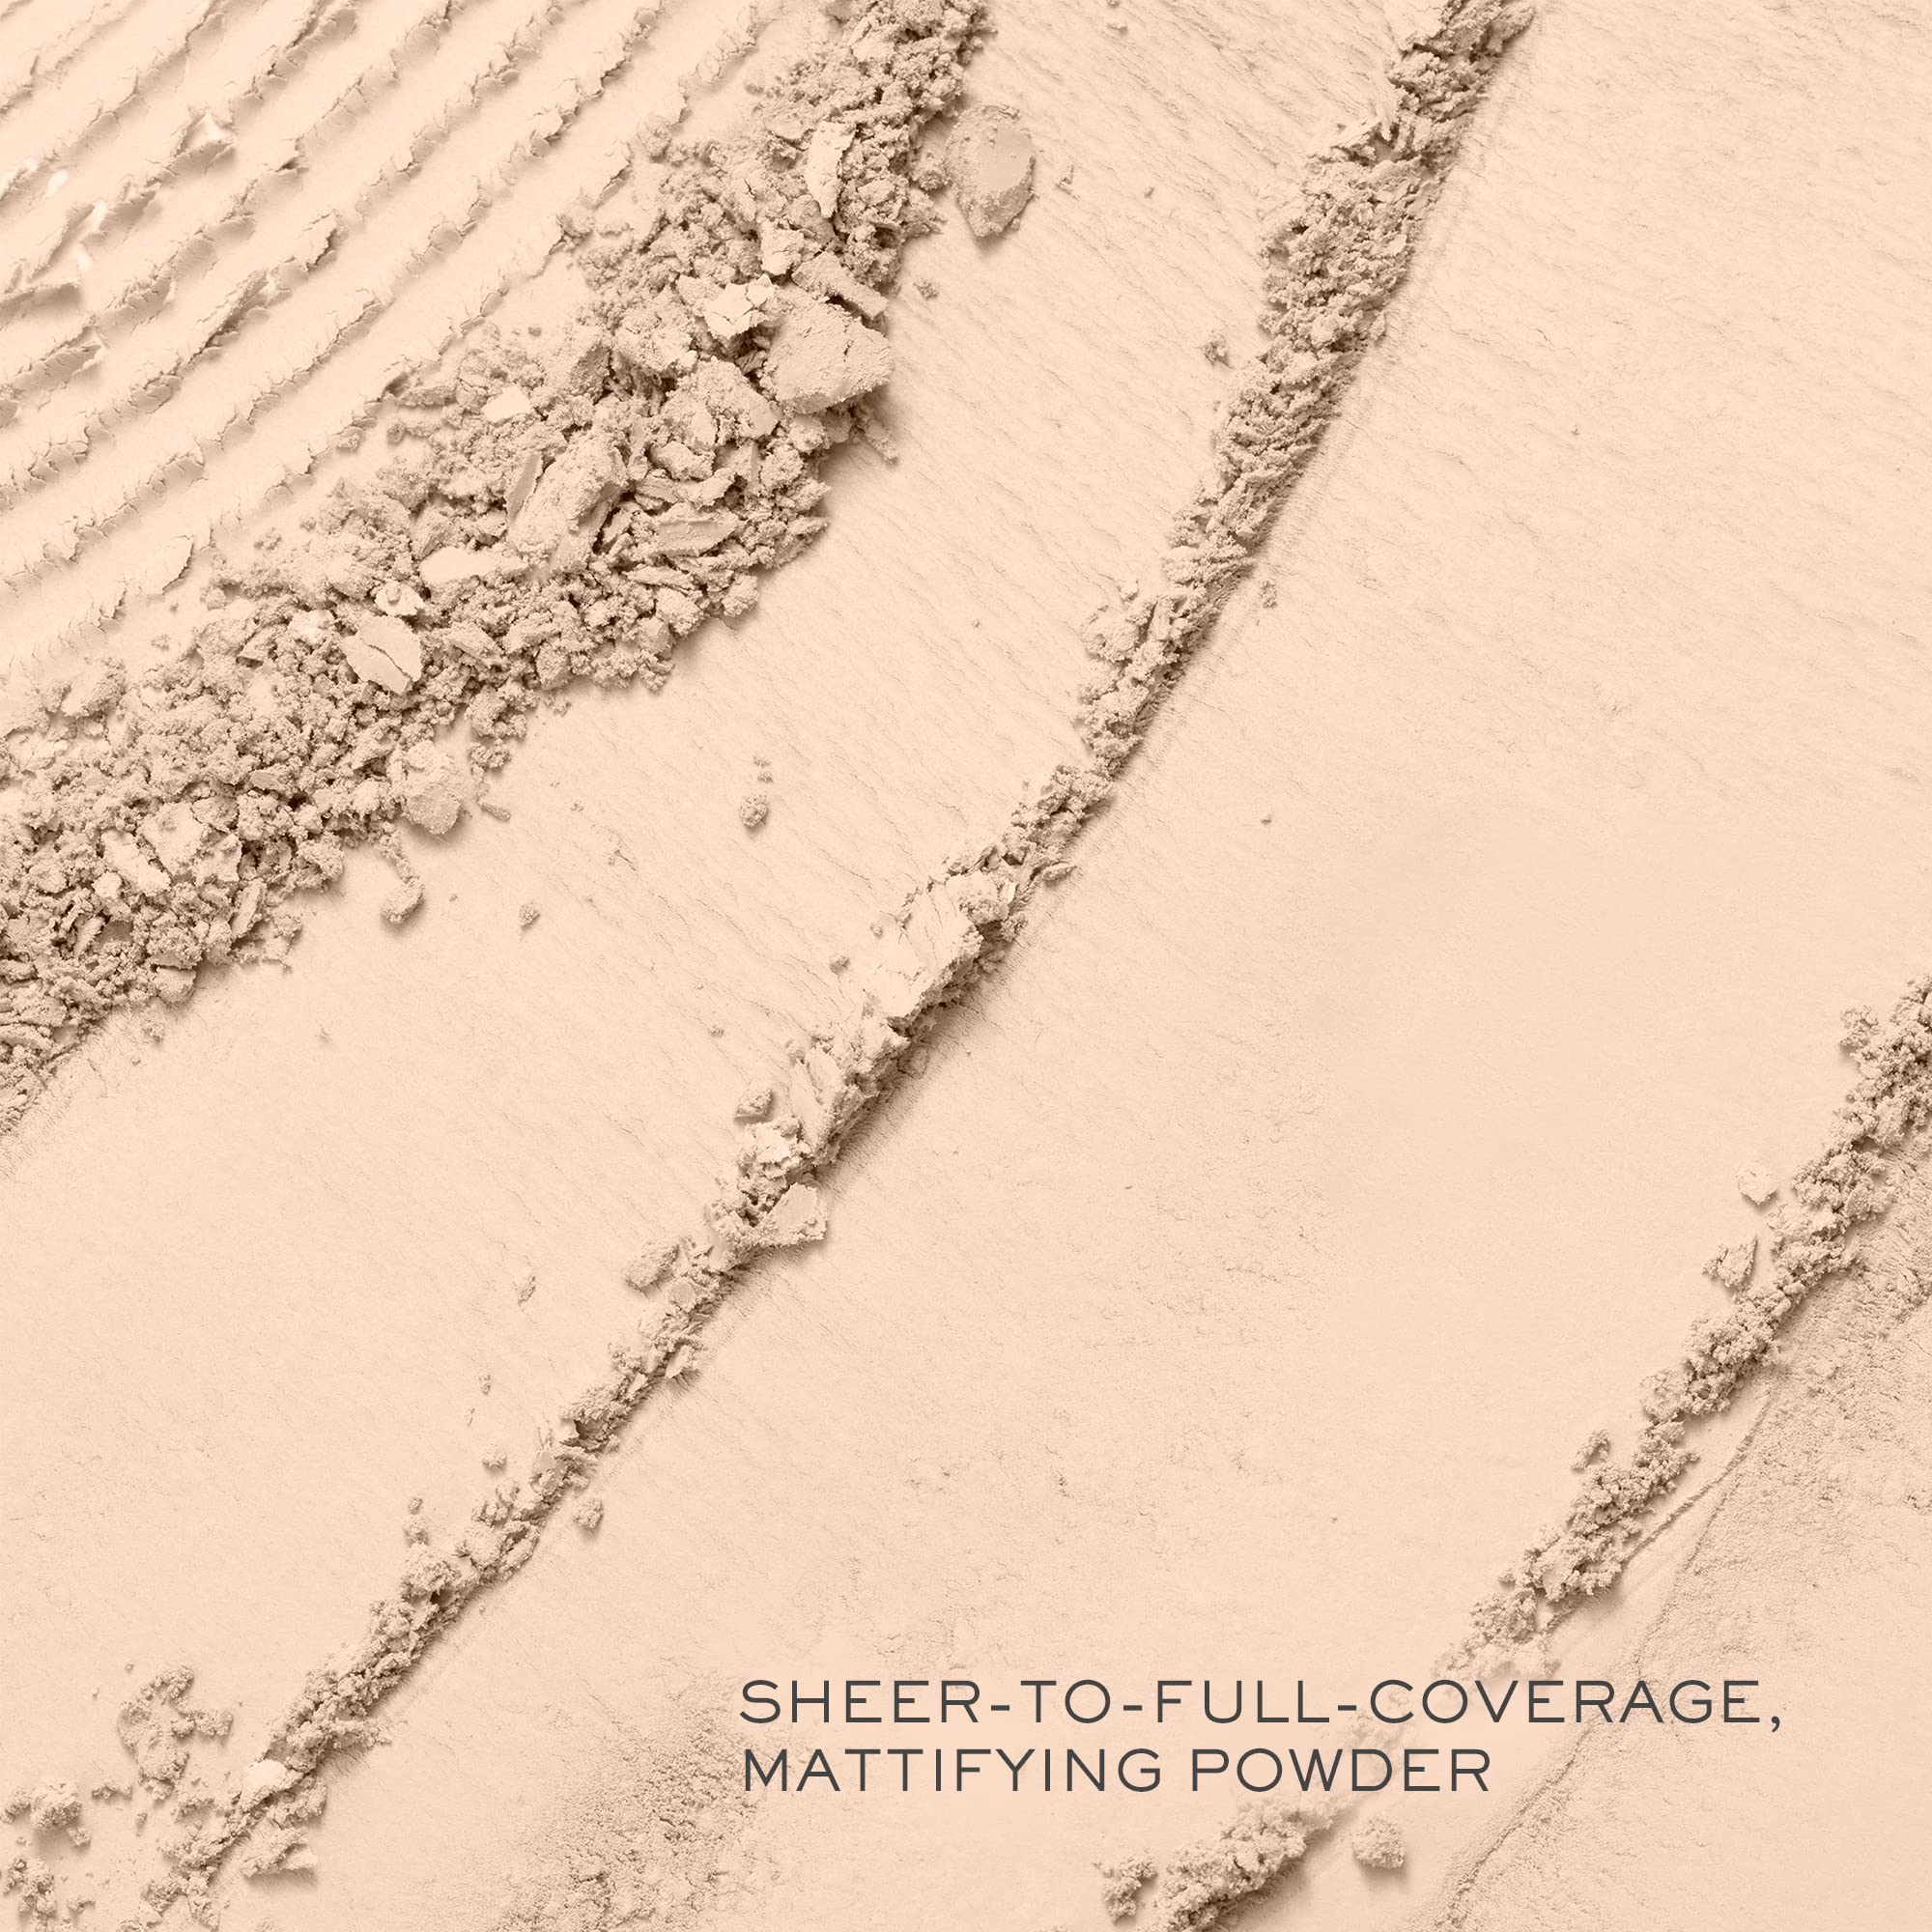 Lancôme Dual Finish Multi-tasking Longwear Powder Foundation - Matte Finish - Long-wearing - Full Coverage - Pressed Powder Formula